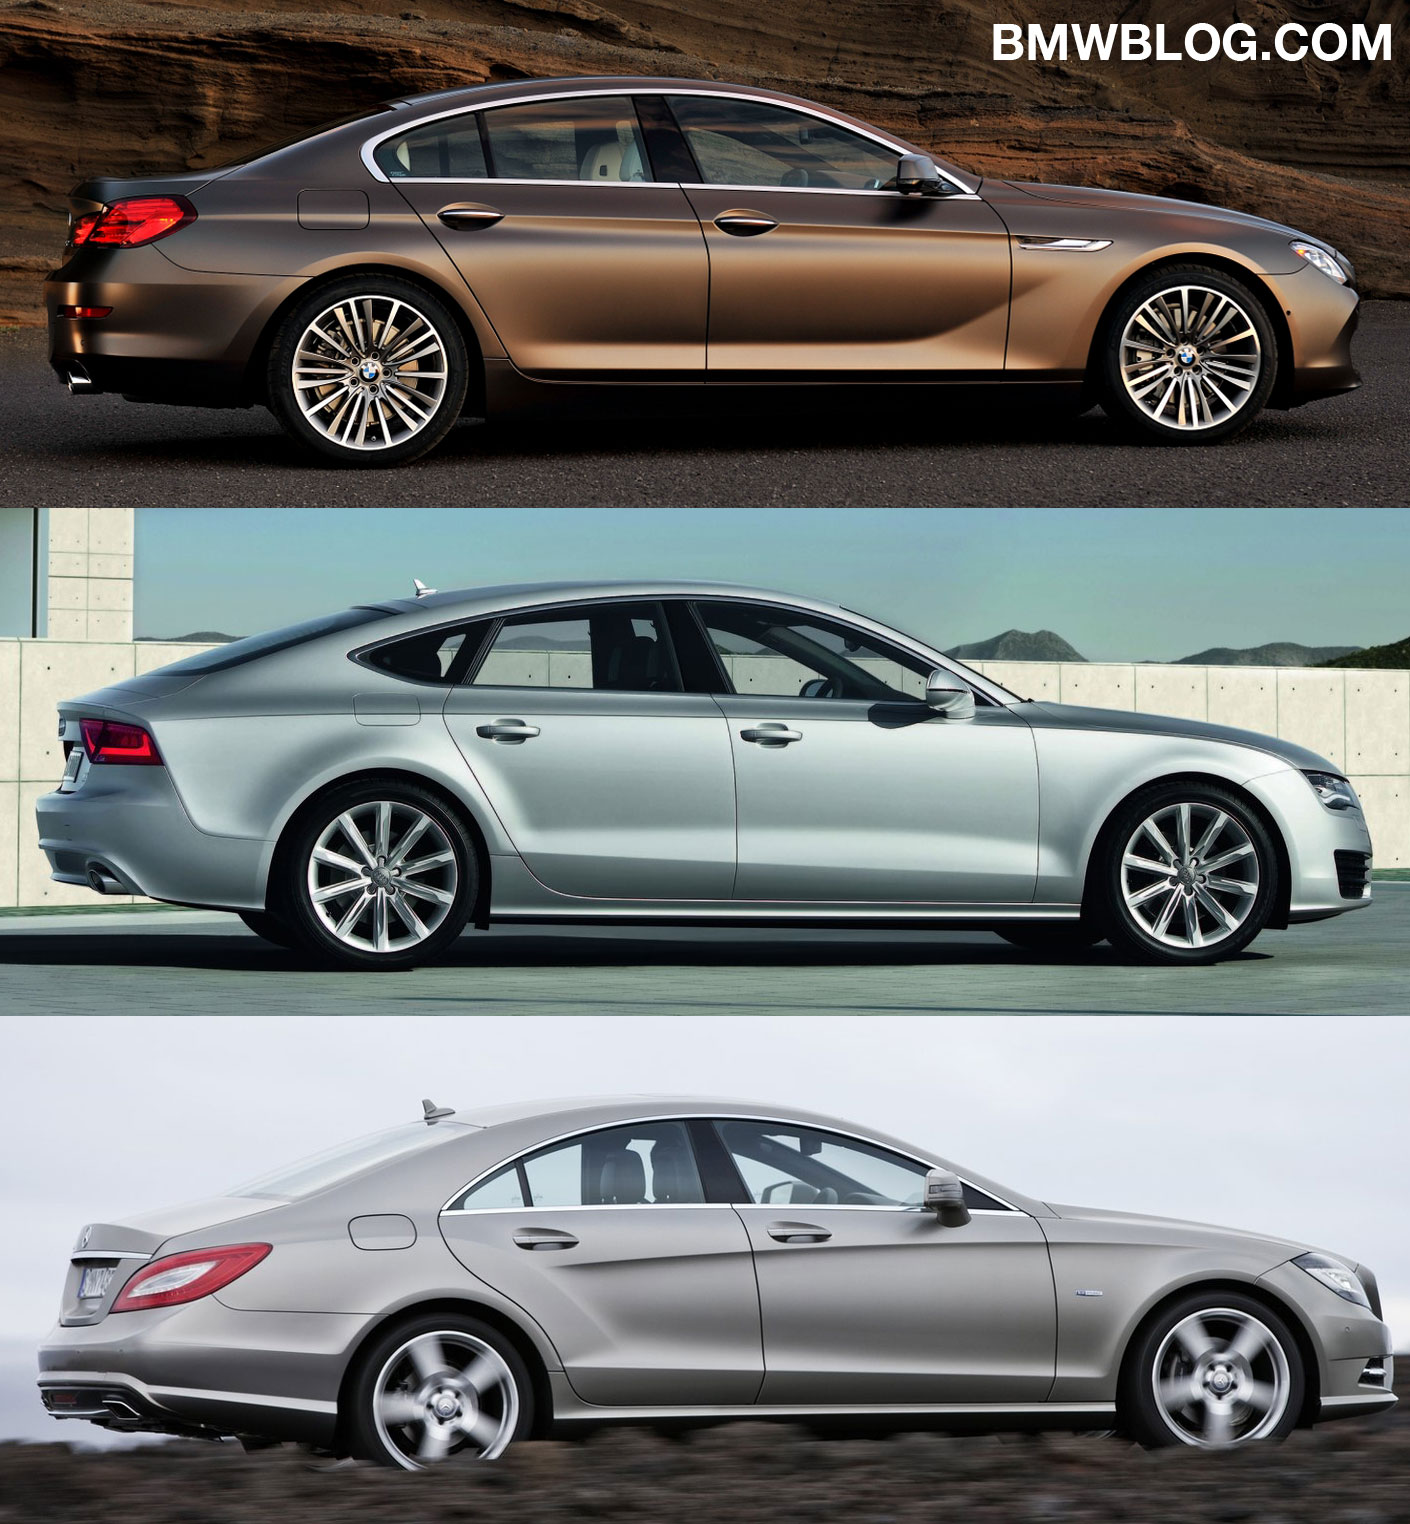 BMW-6er-Gran-Coupé-F06-Bild-Vergleich-Mercedes-CLS-Audi-A7-Sportback-Seite.jpg